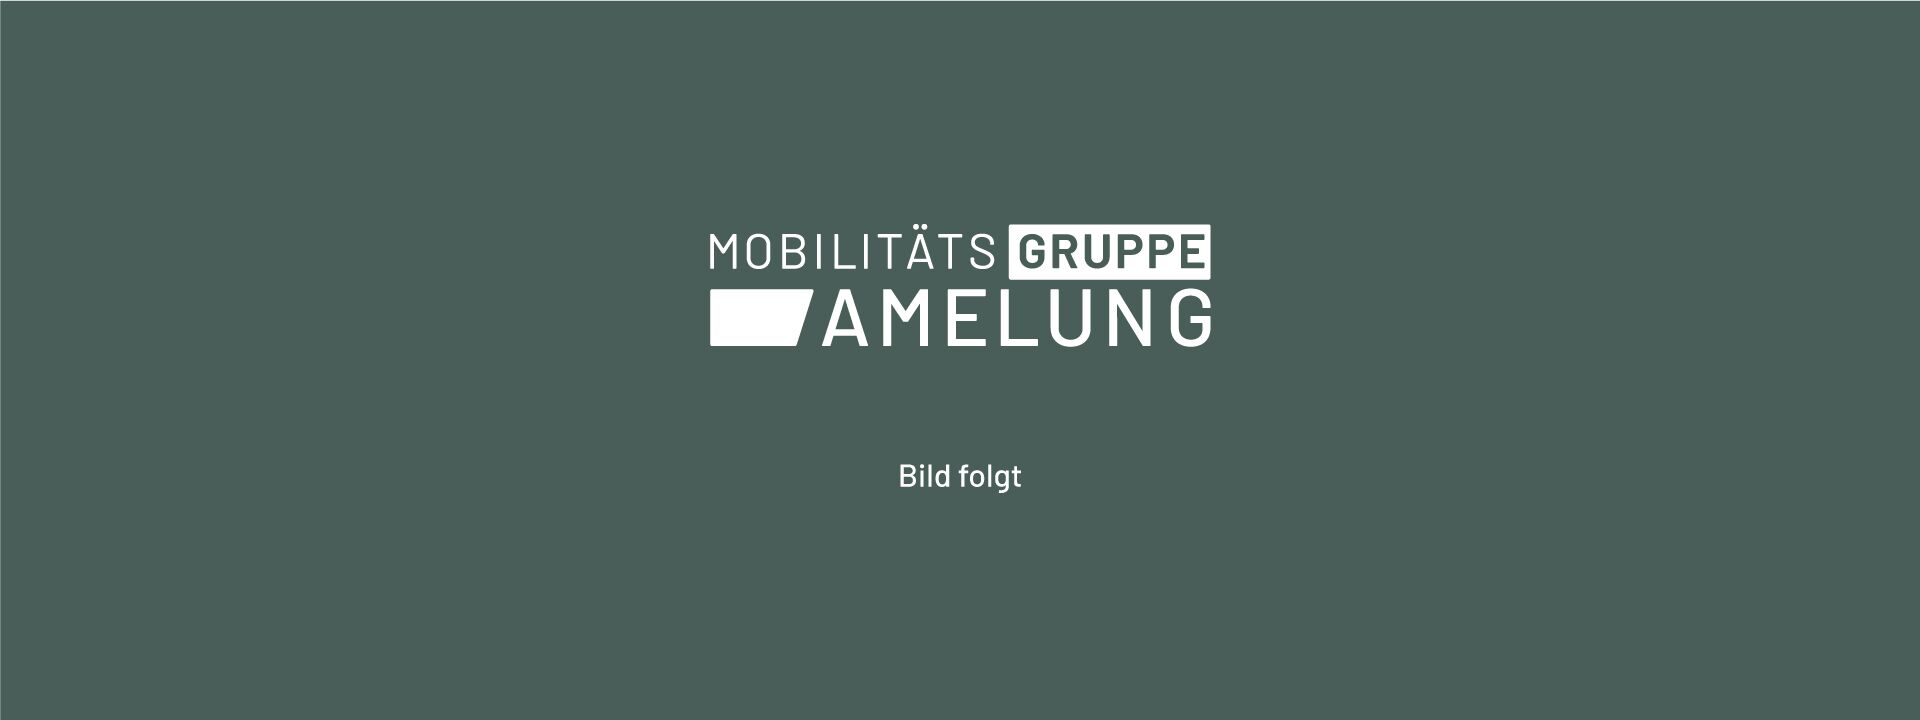 Kundenbewertung ANDAMO Holding GmbH & Co. KG